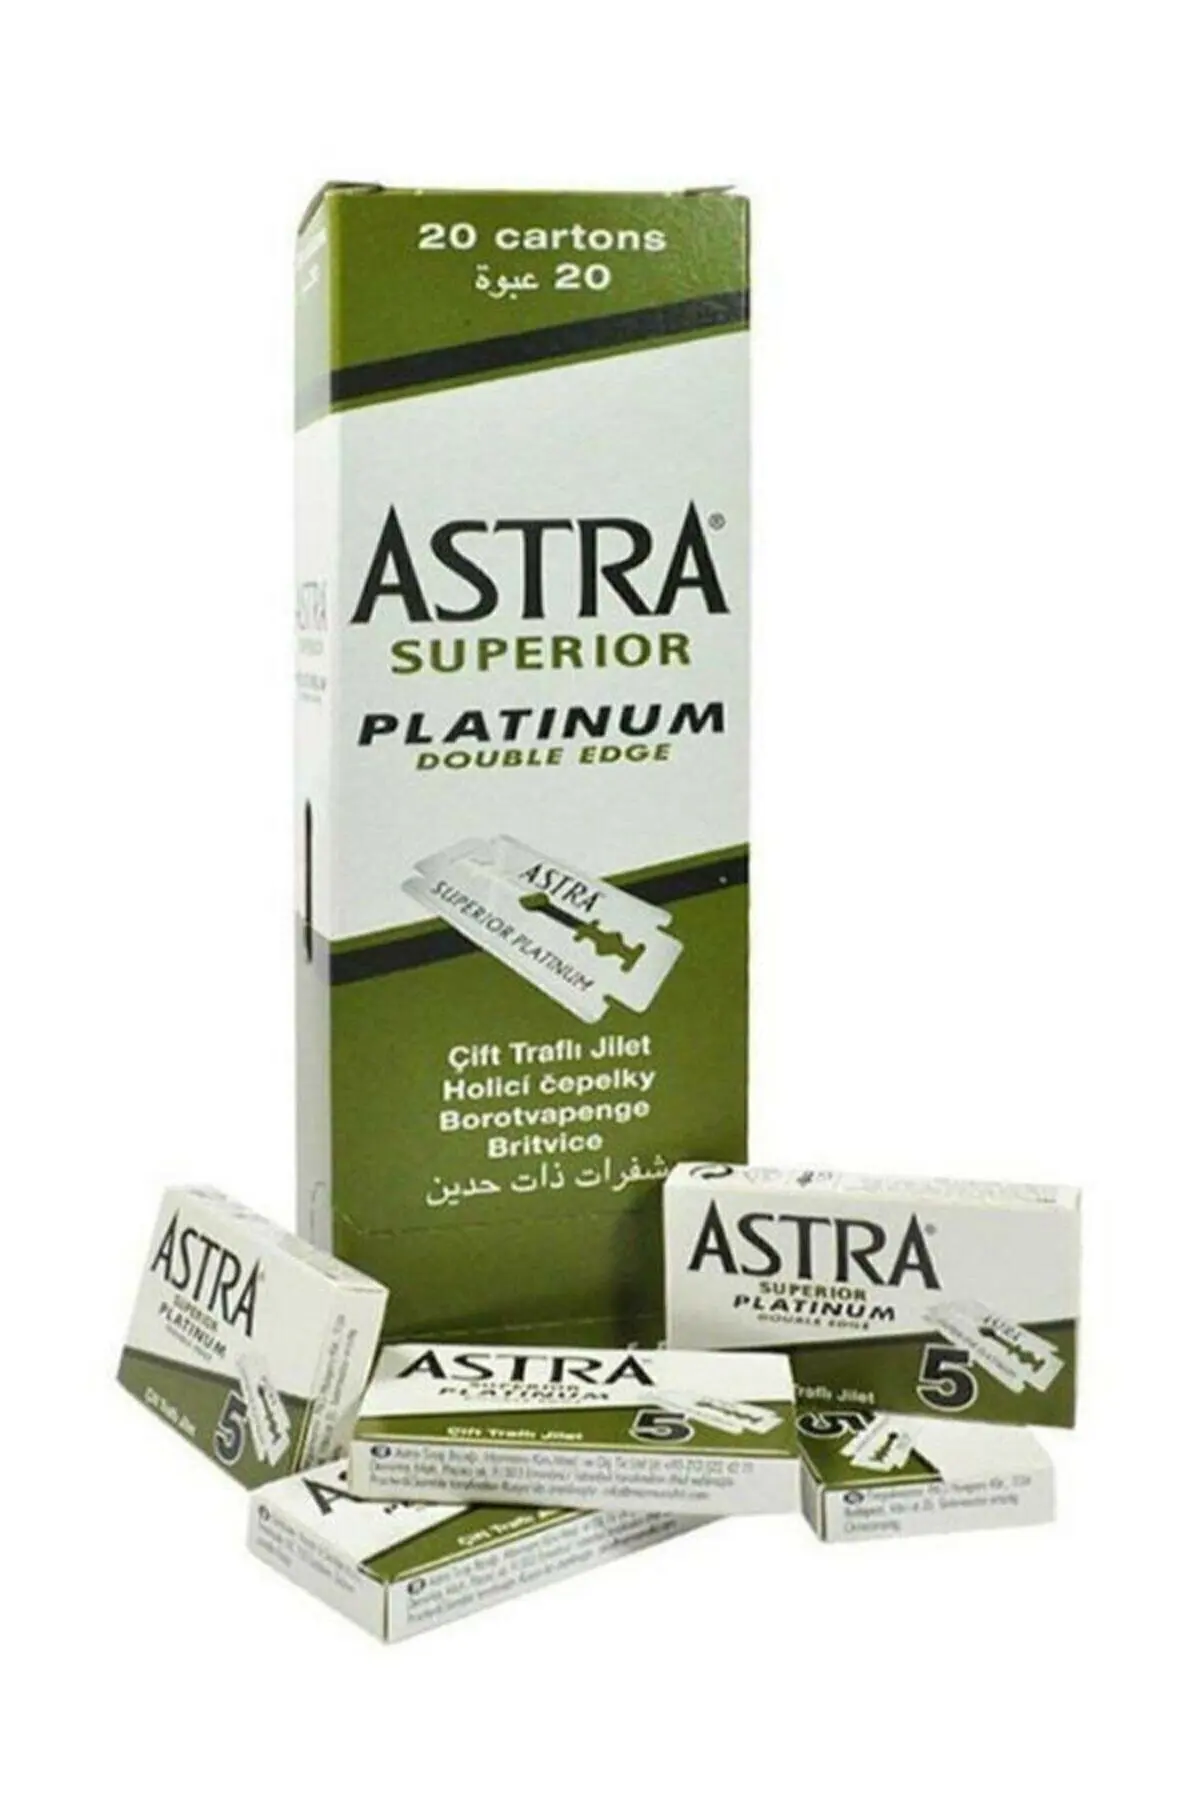 Astra 100 Pcs Razor Blade Double Edge Superior Platinum Double Edge For Shave Safety Shaving Hight Quailty For Men Razor Blade